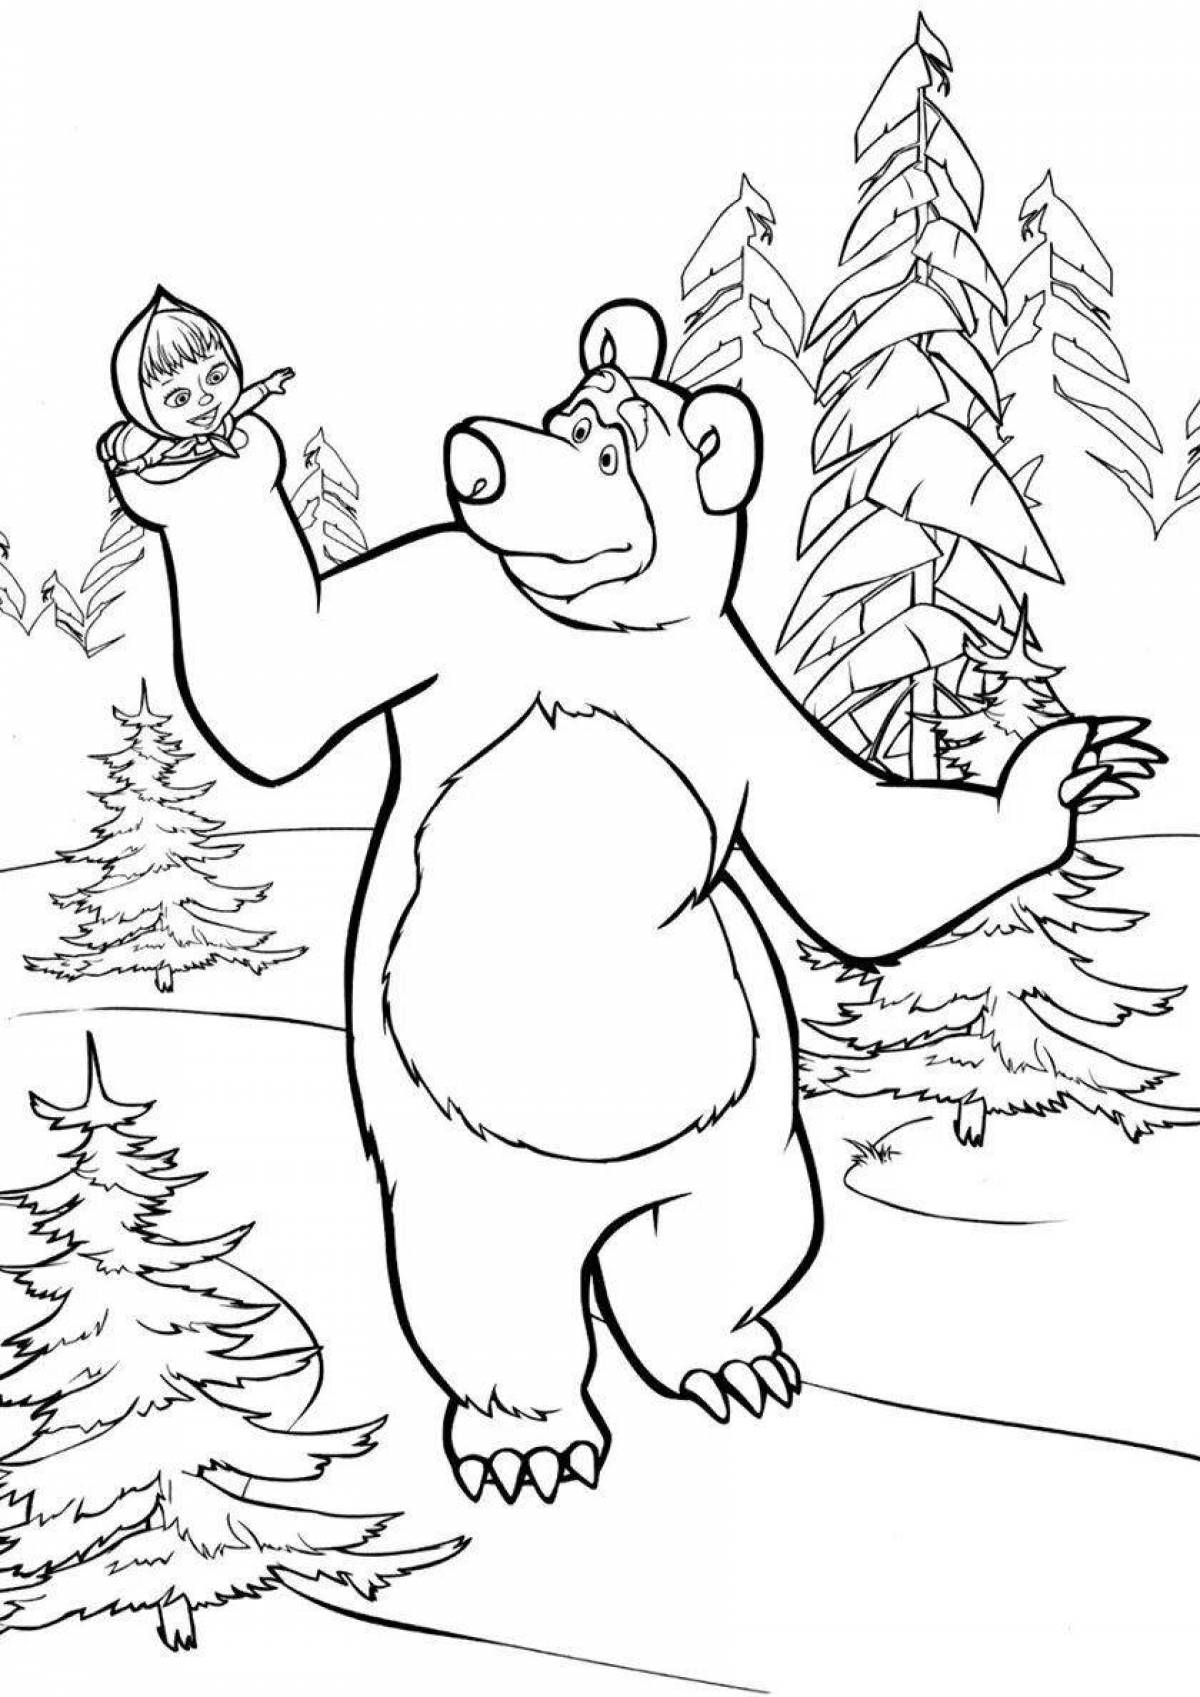 Coloring page charming Masha and the bear